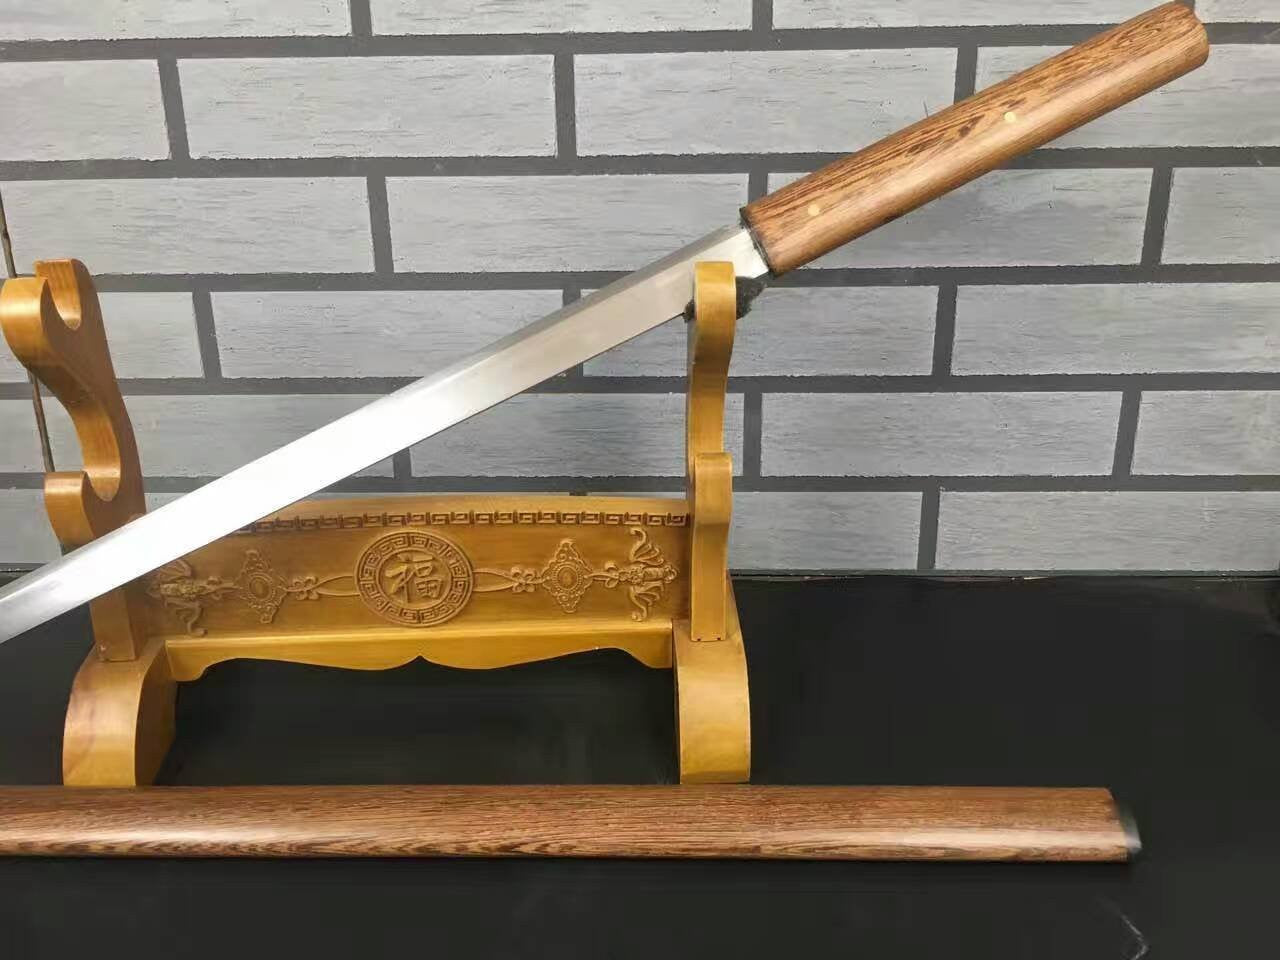 Tang dao(High manganese steel,Rosewood scabbard)Full tang,Length 39" - Chinese sword shop